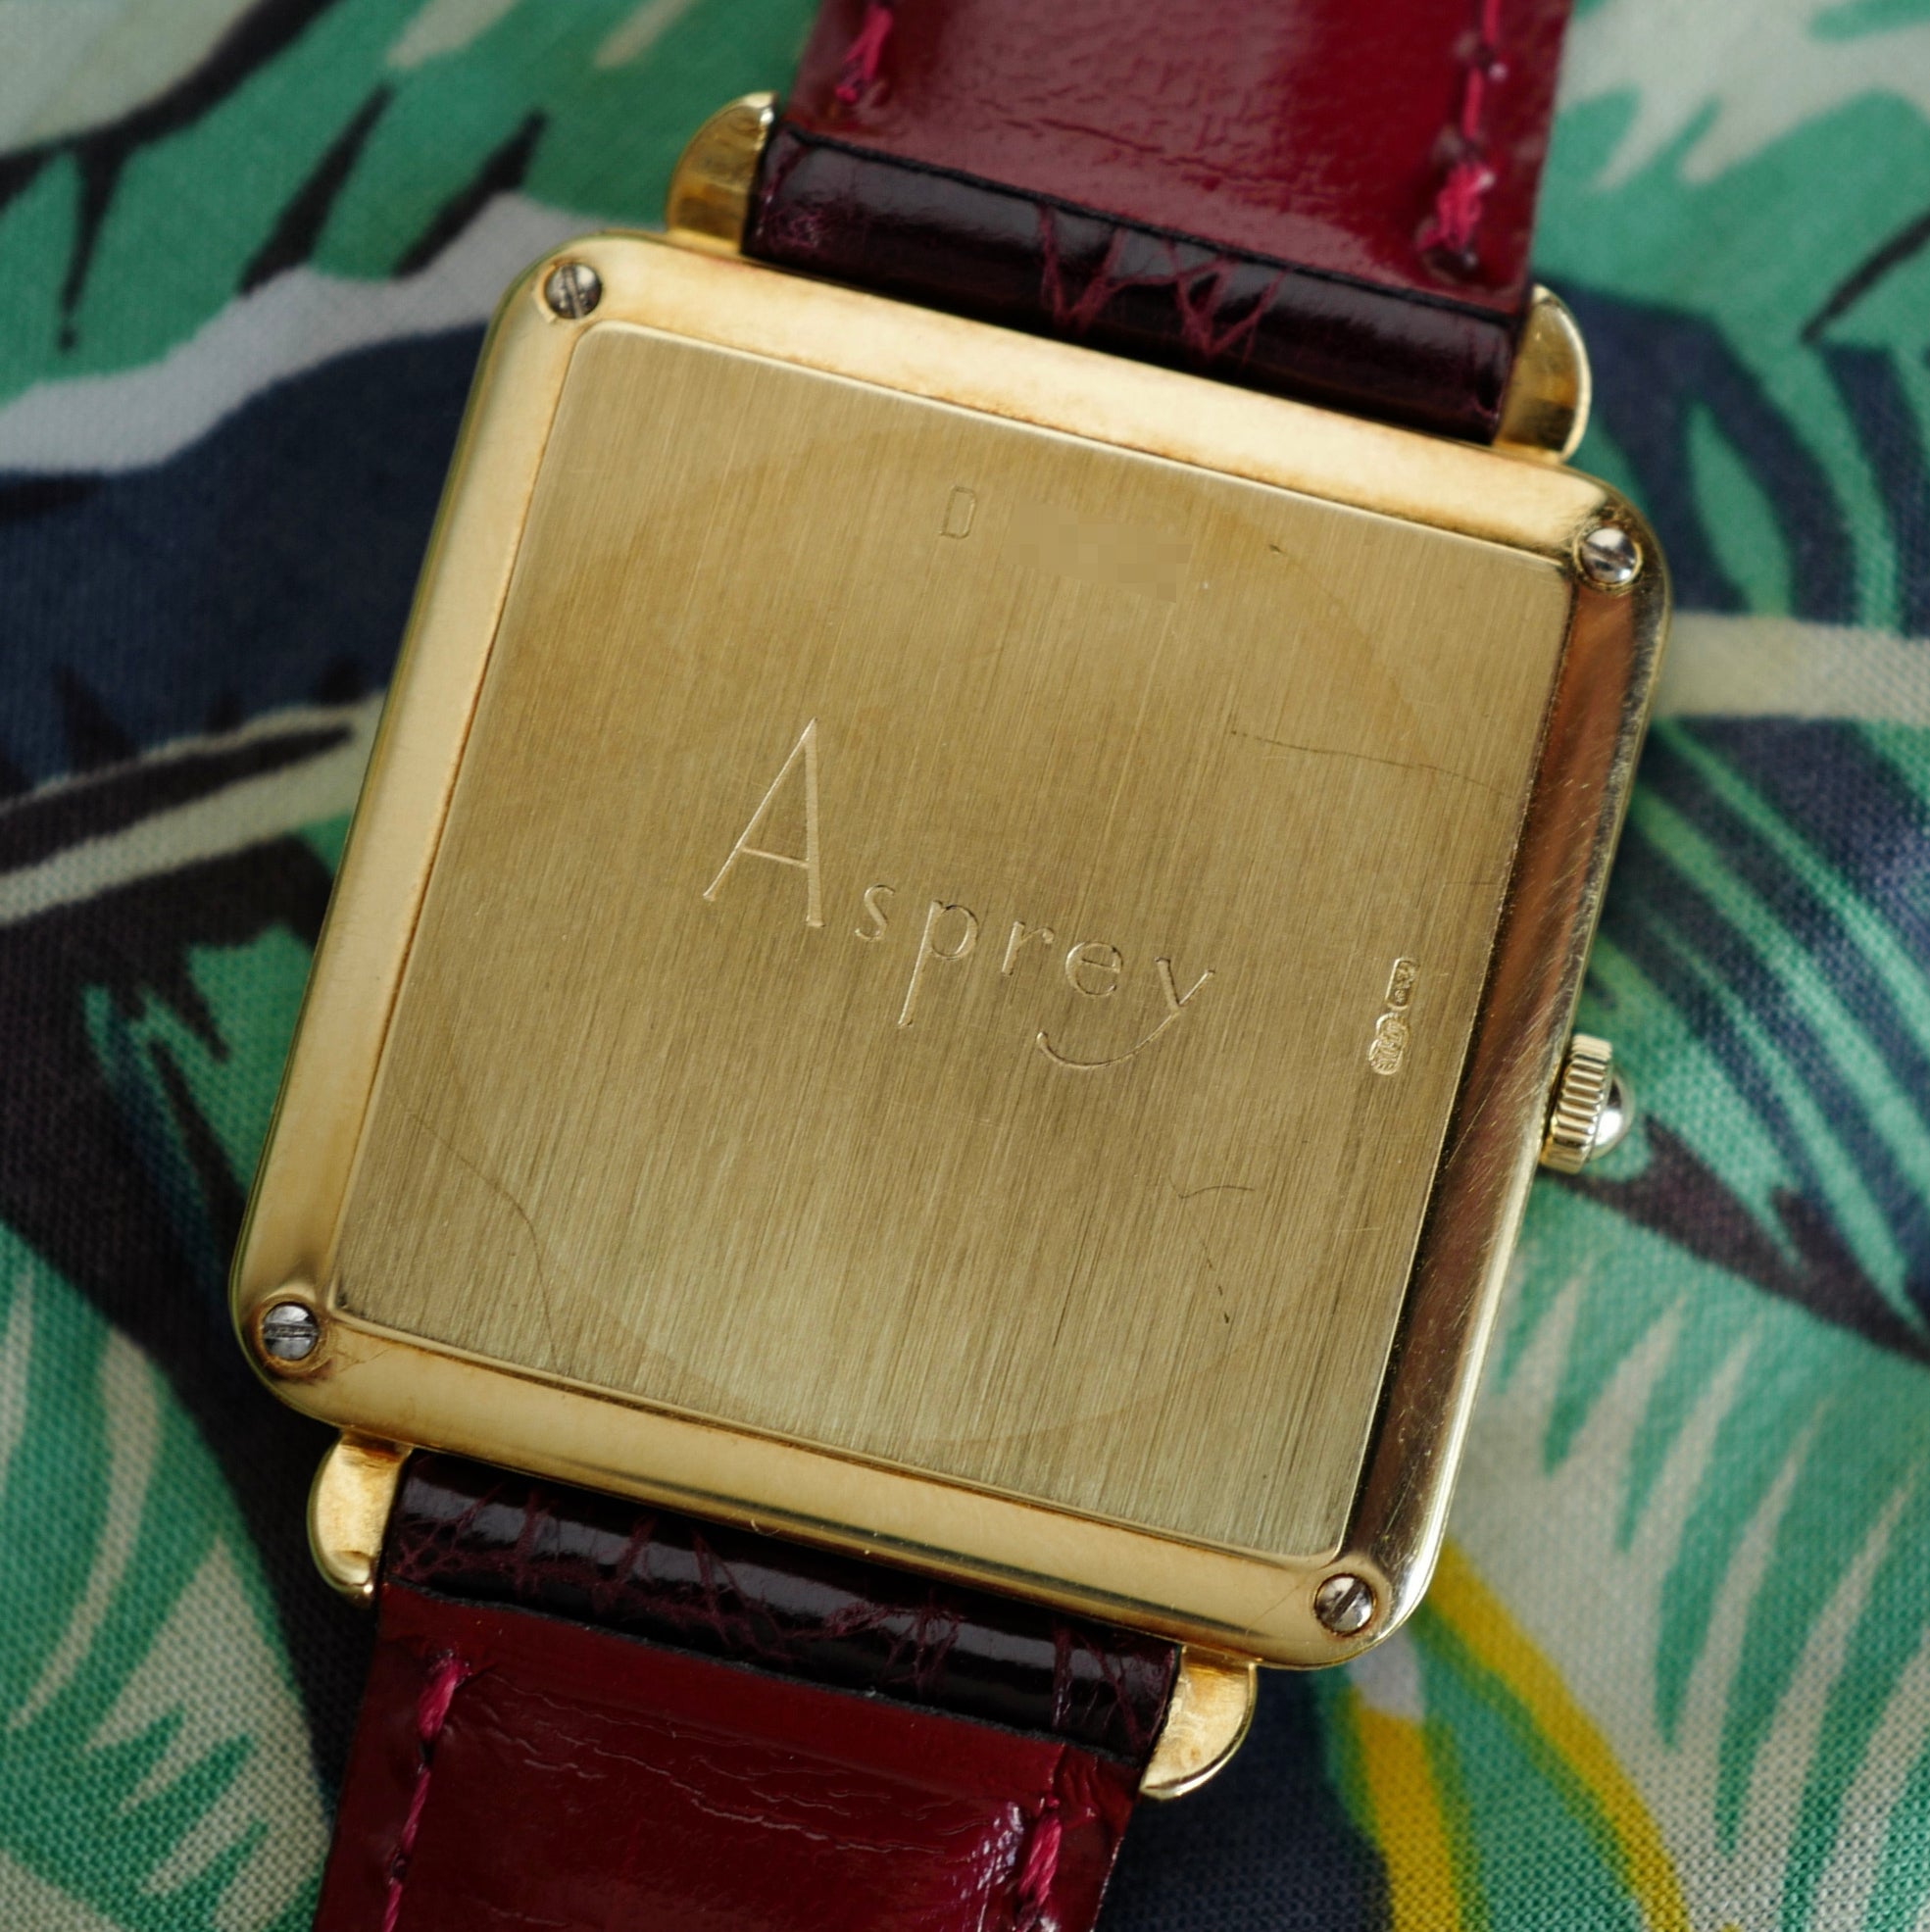 Audemars Piguet Yellow Gold Diamond Watch with Omani Ruler retailed by Asprey